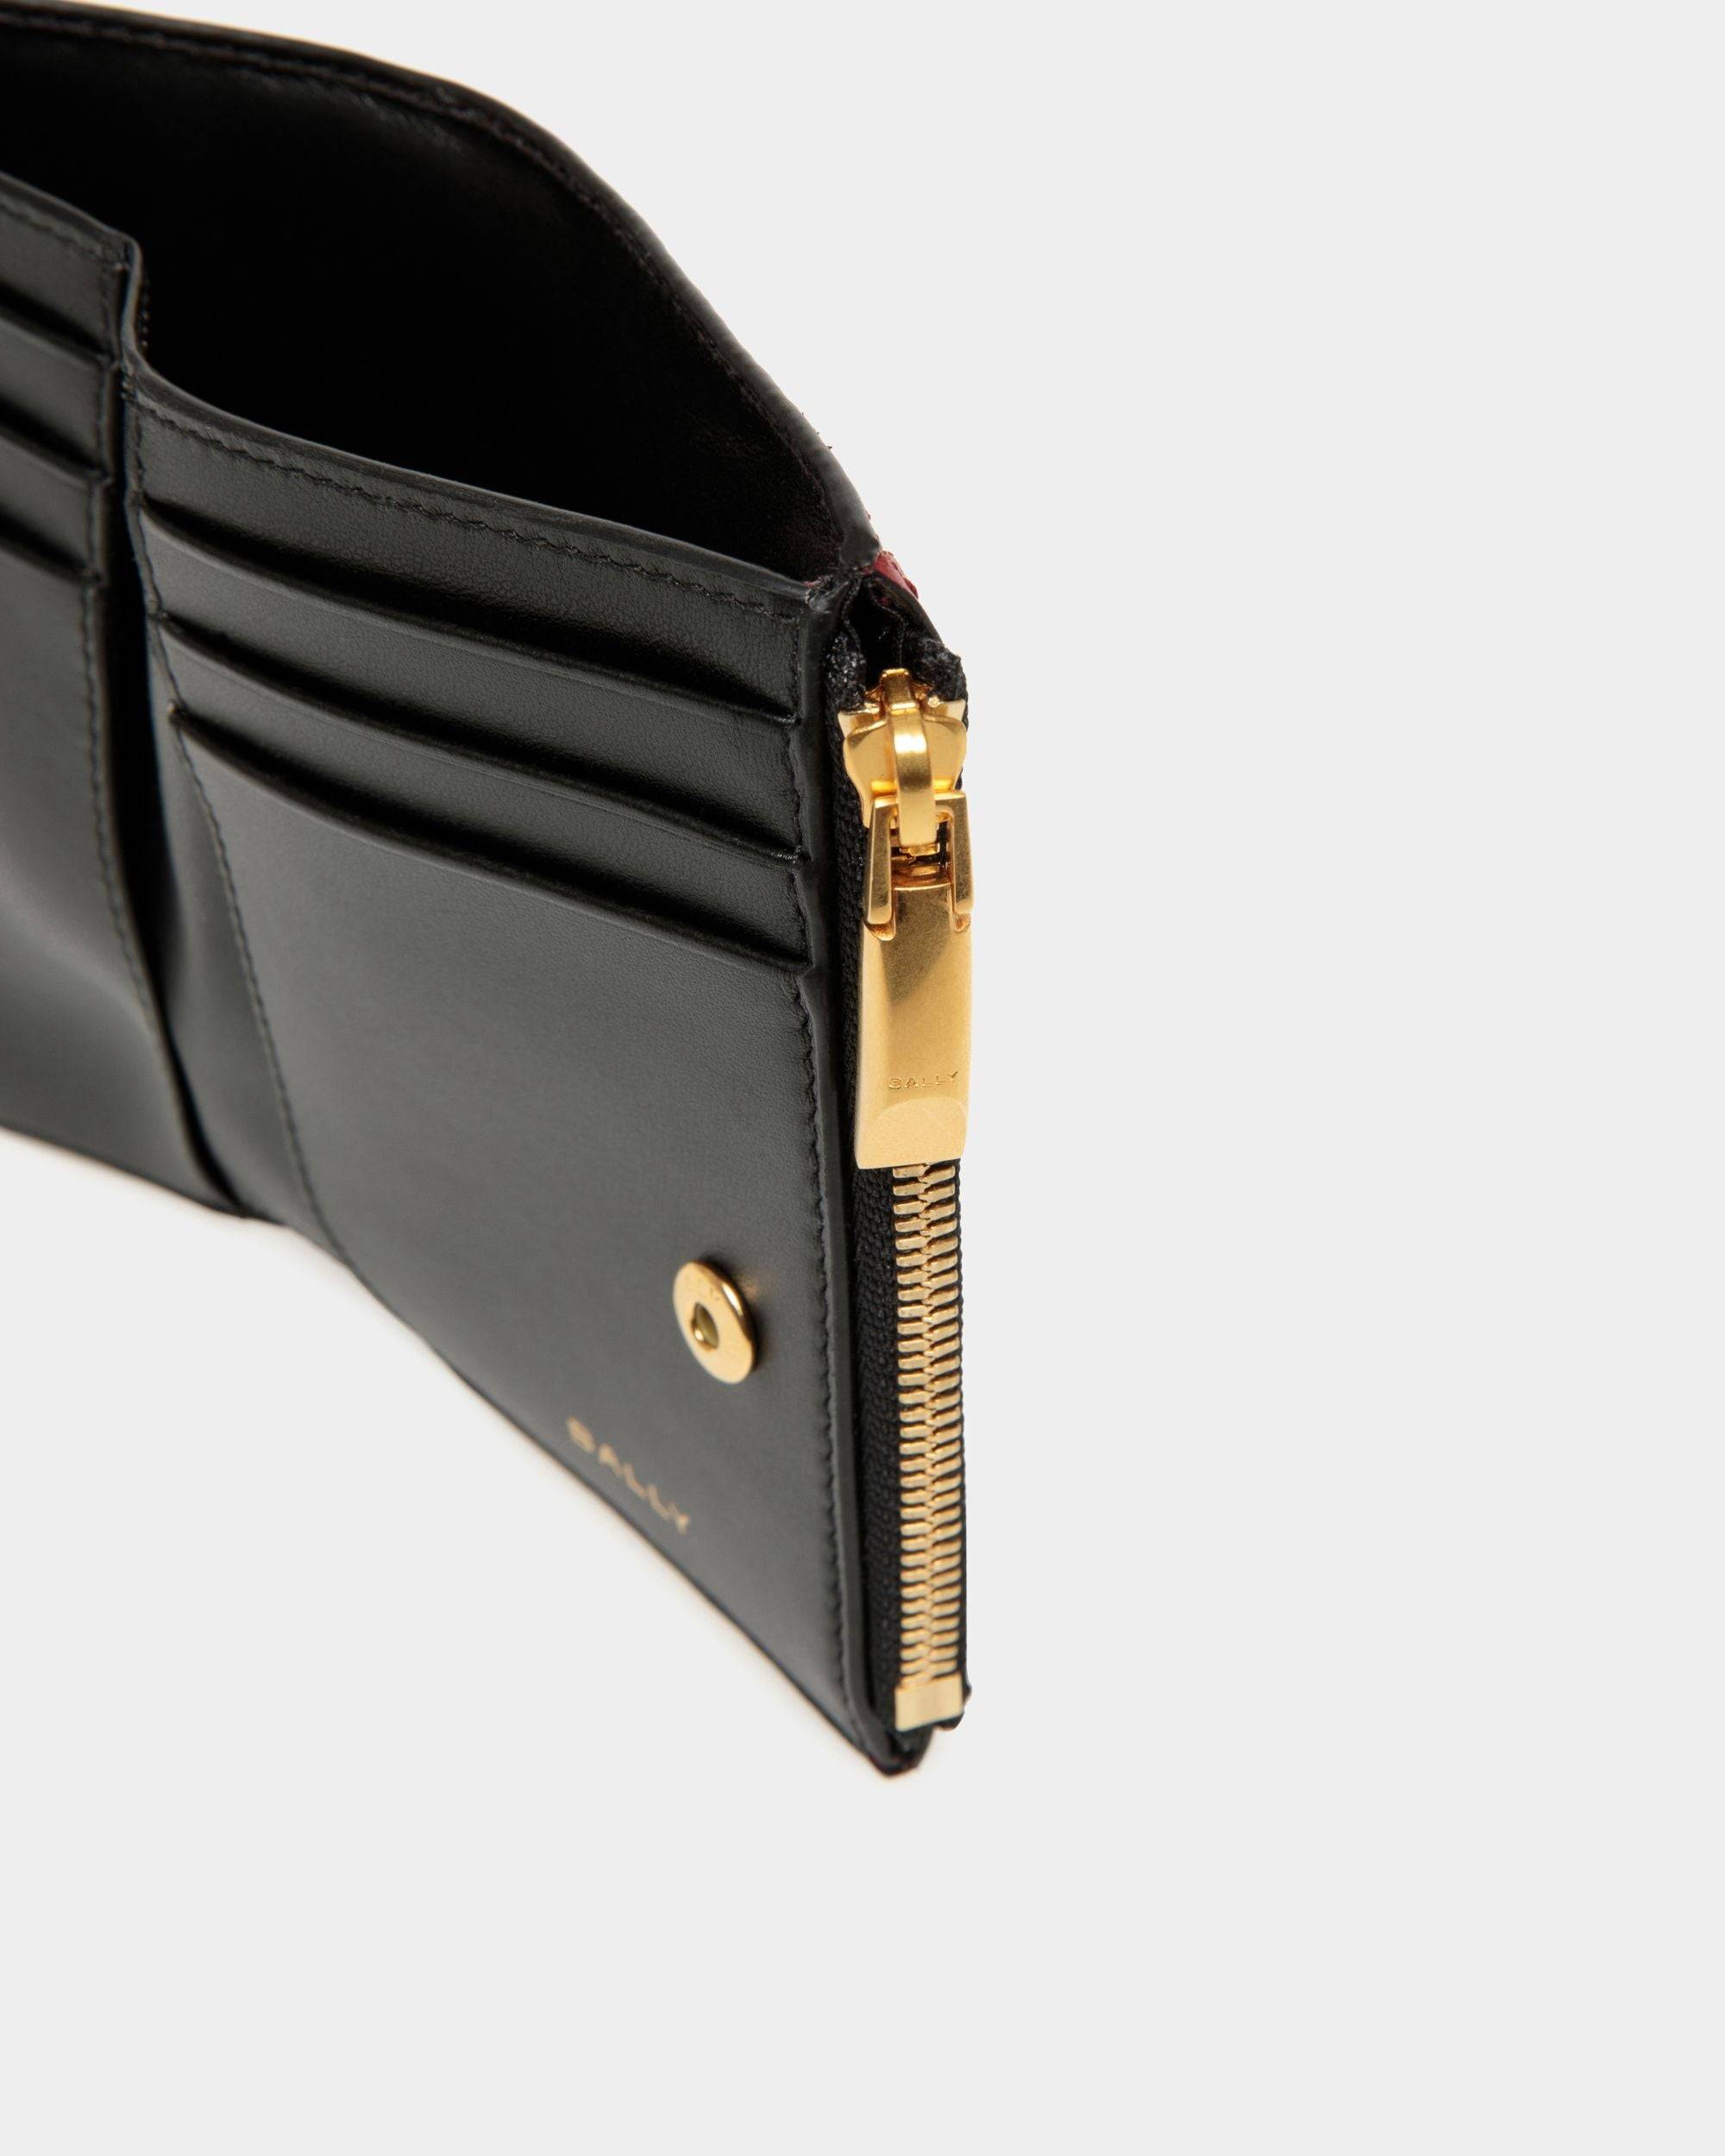 Code | Women's Wallet in Black Leather | Bally | Still Life Detail